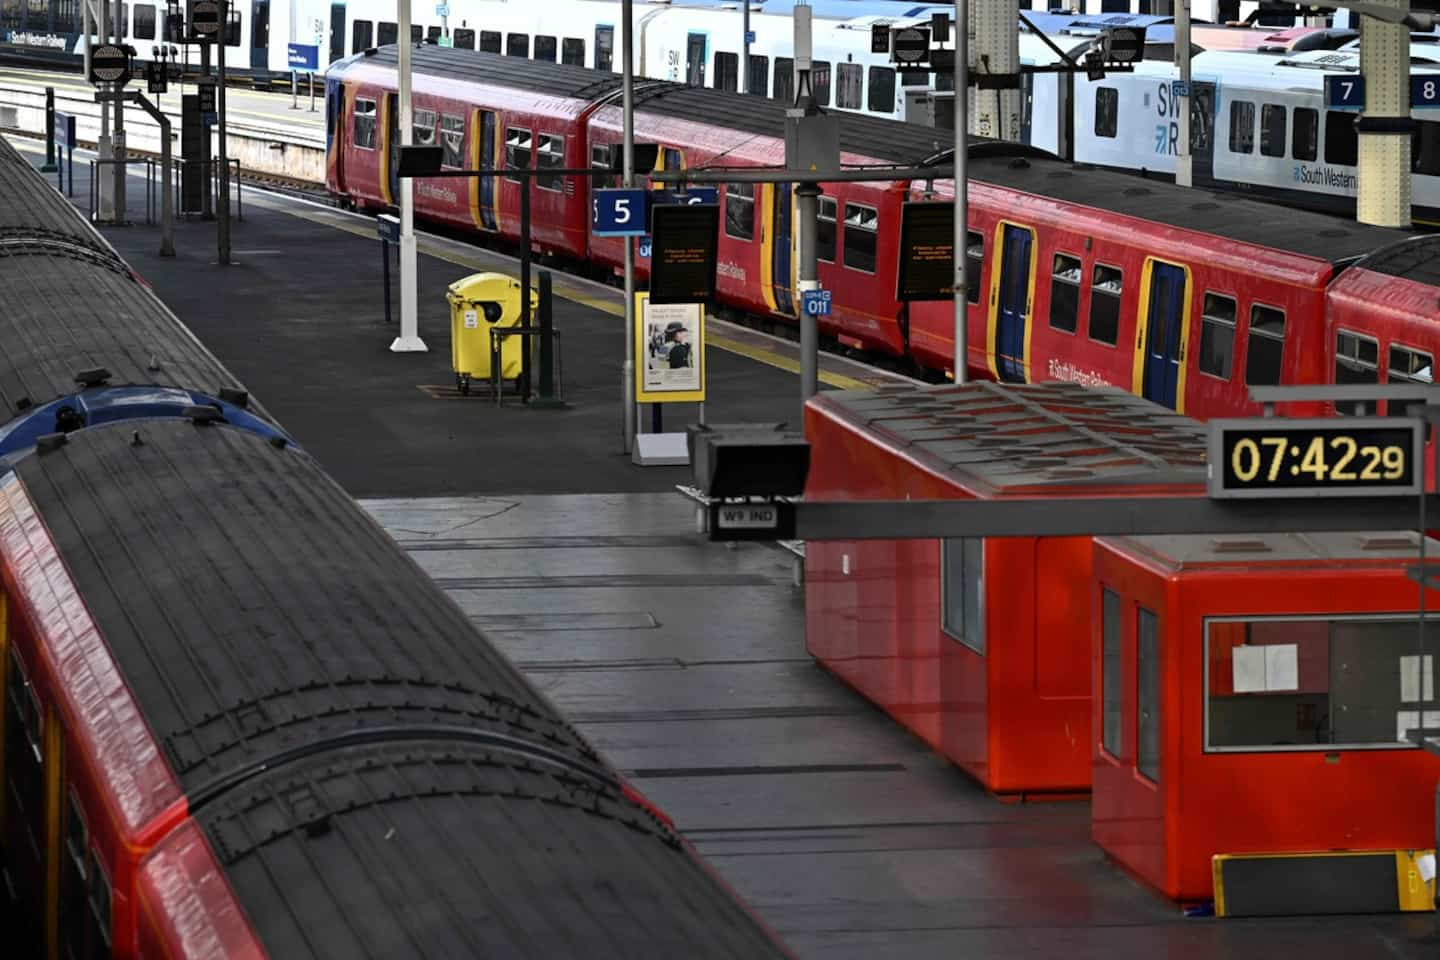 New UK train strike amid purchasing power crisis